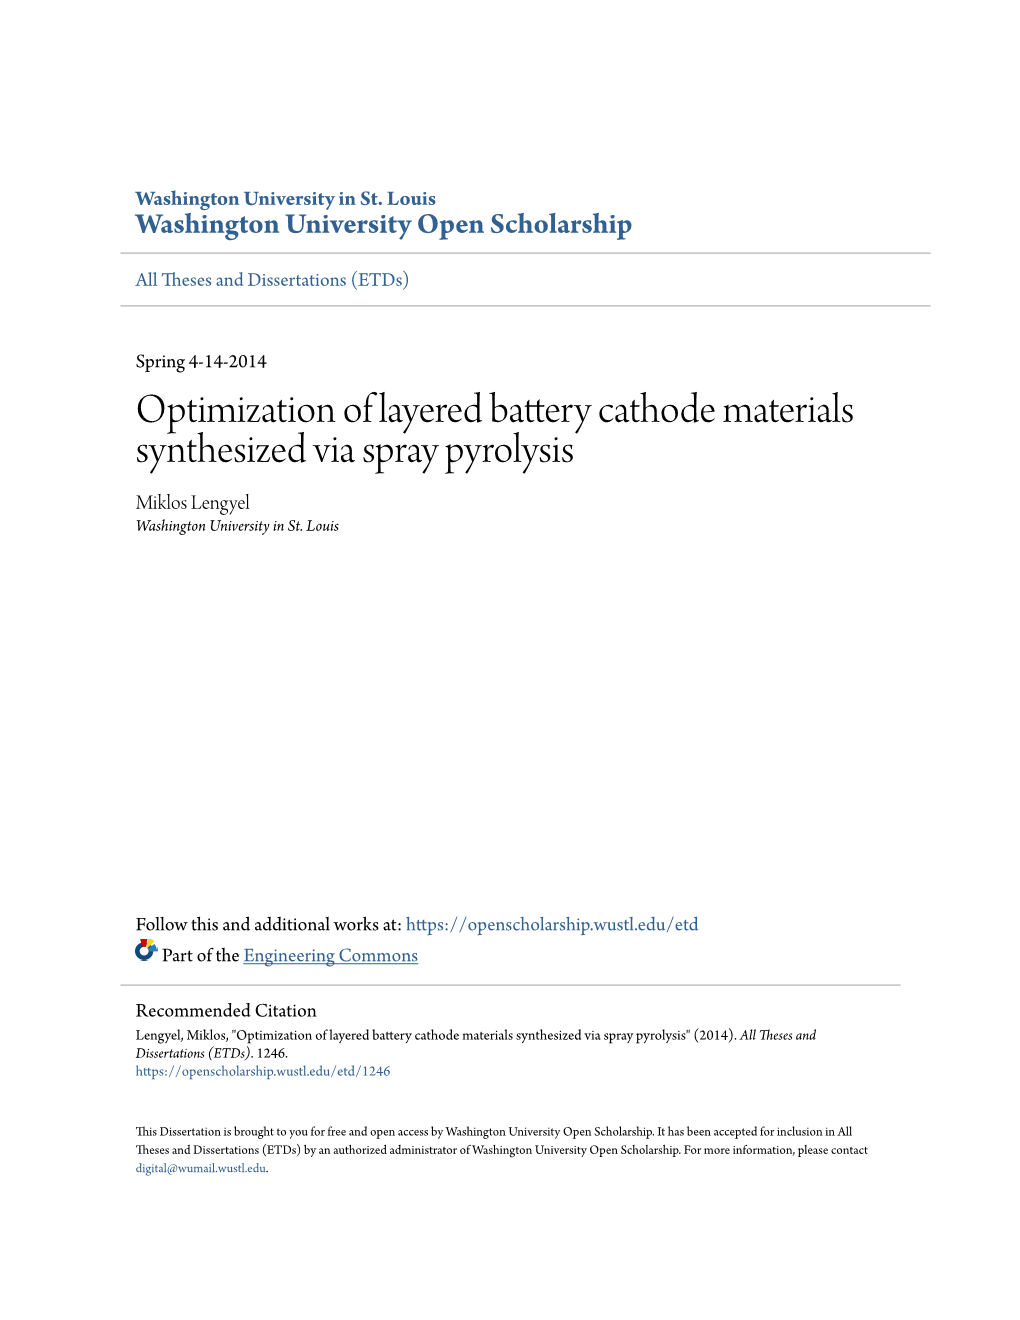 Optimization of Layered Battery Cathode Materials Synthesized Via Spray Pyrolysis Miklos Lengyel Washington University in St